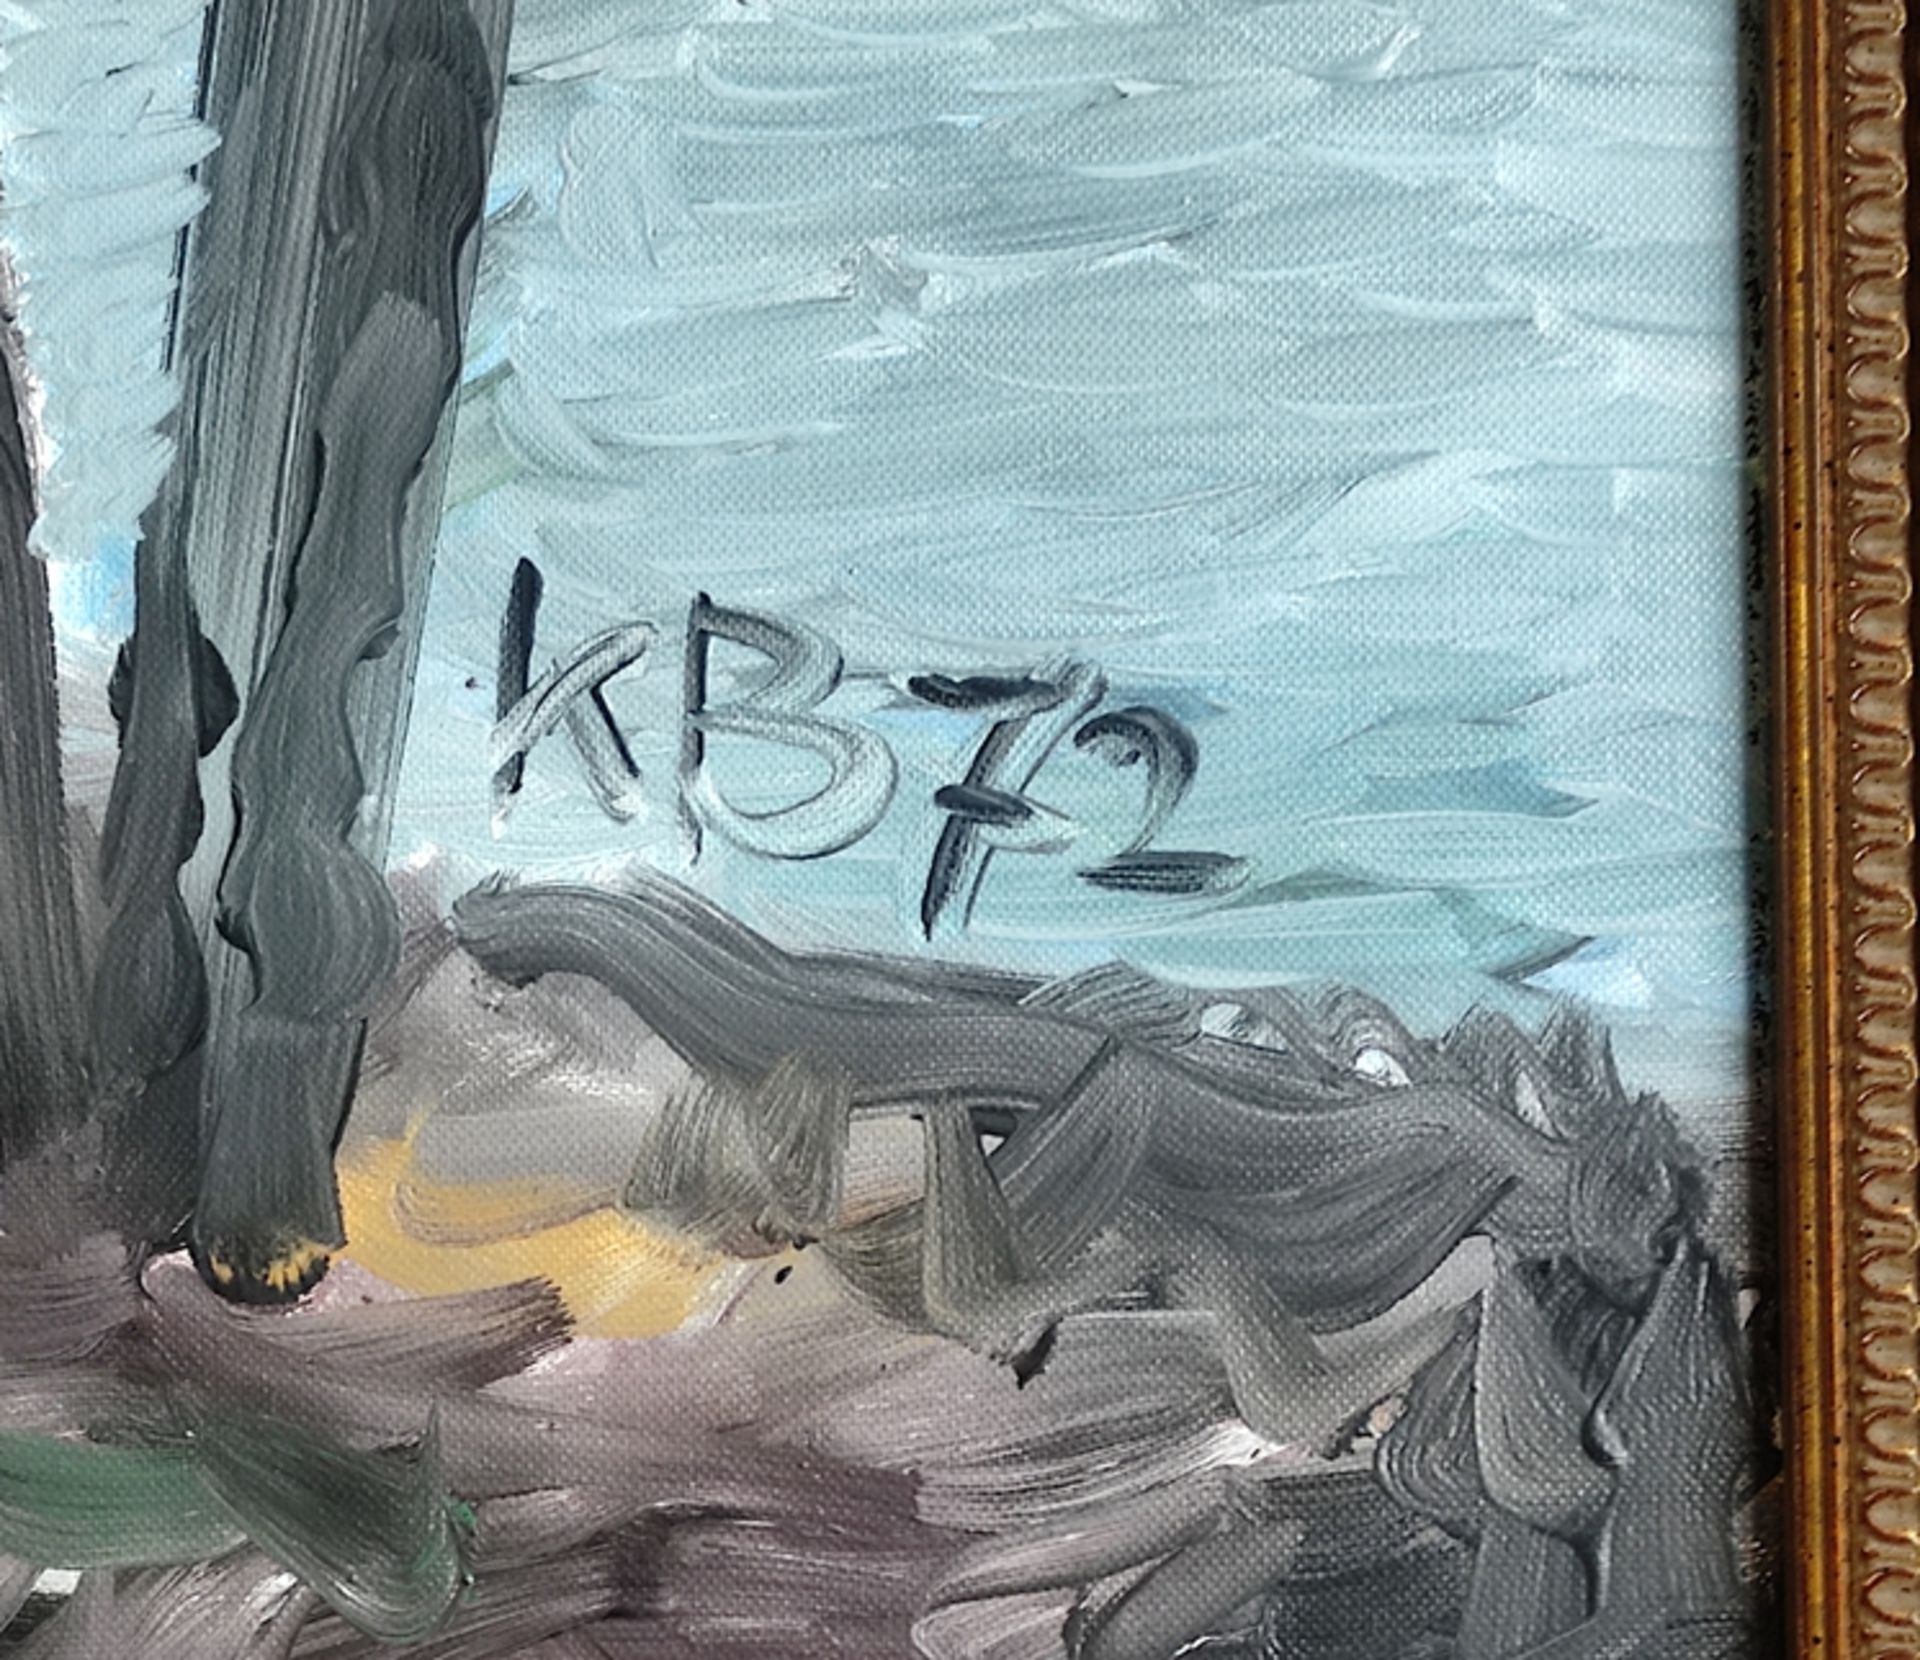 Bäuerle, Klaus (1943 Konstanz) "Bodensee", Seeausblickblick, Öl auf Leinwand, rechts unten monogram - Bild 3 aus 4